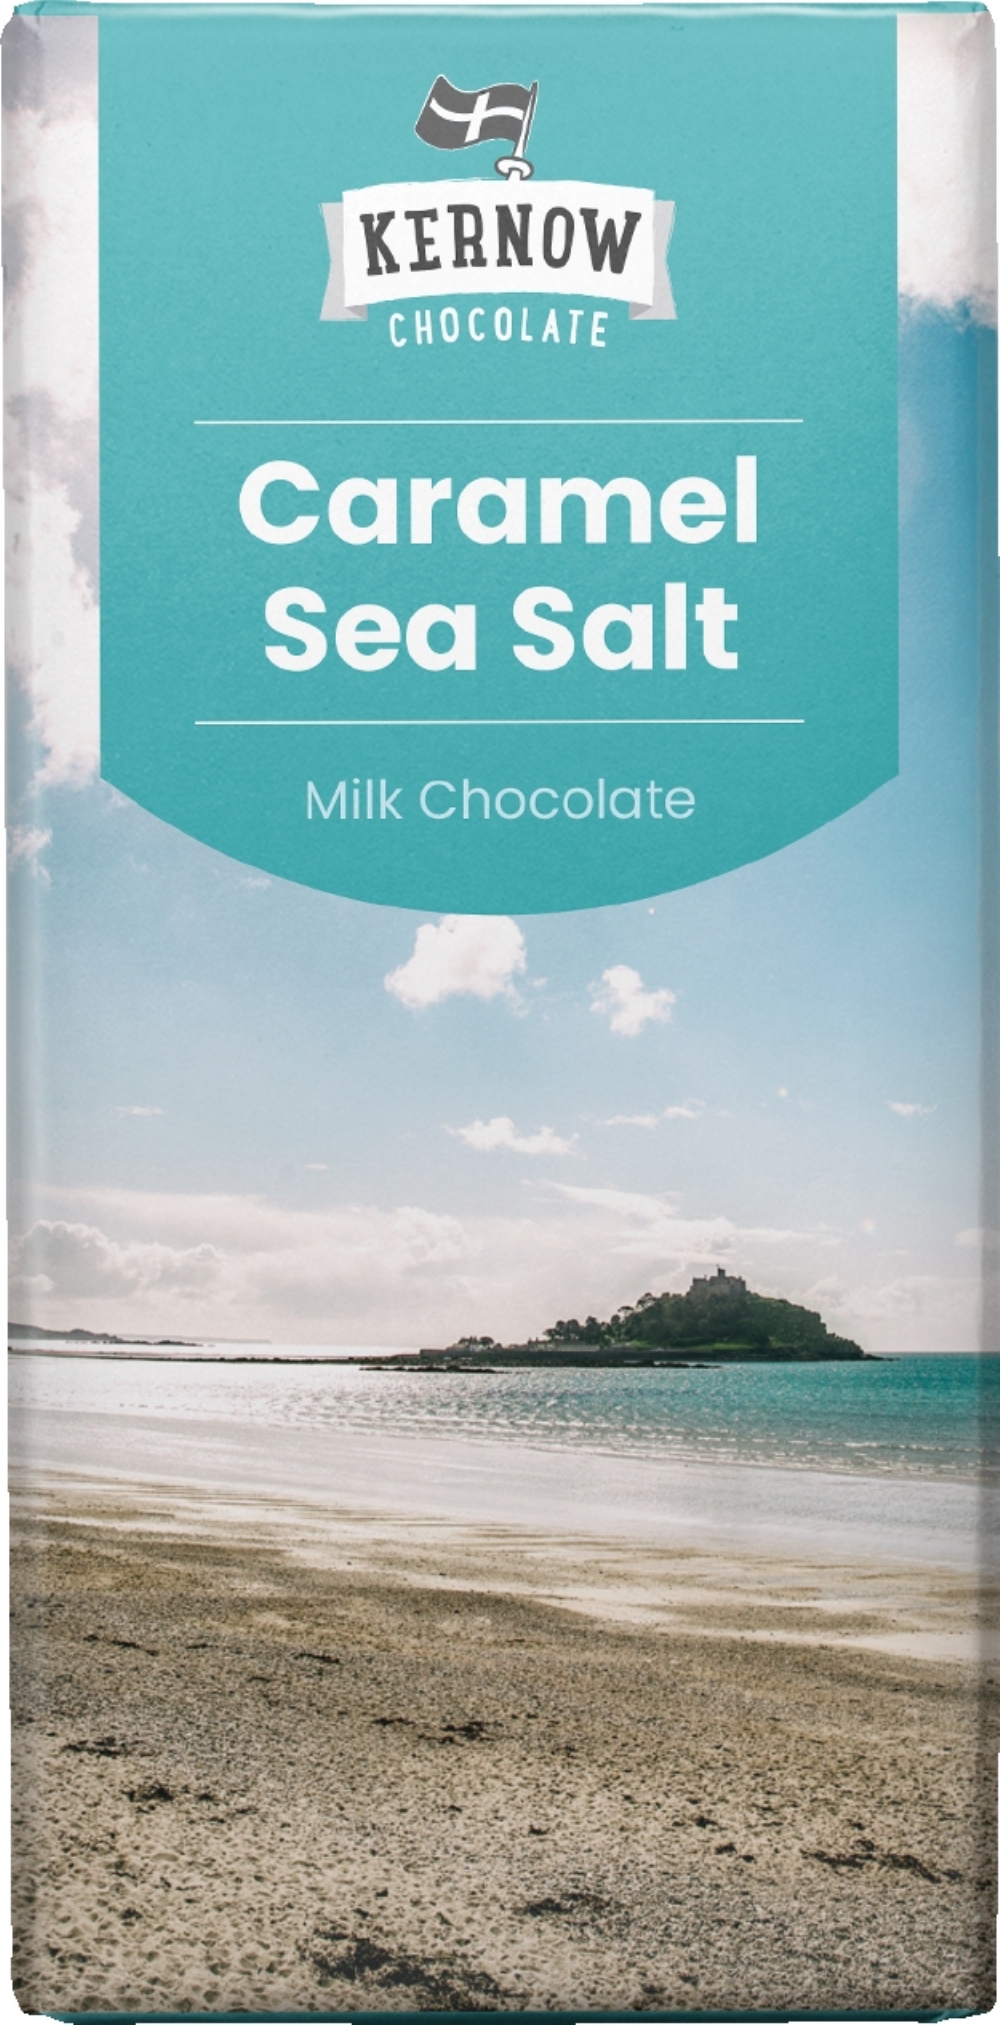 KERNOW Caramel Sea Salt Chocolate Bar 100g